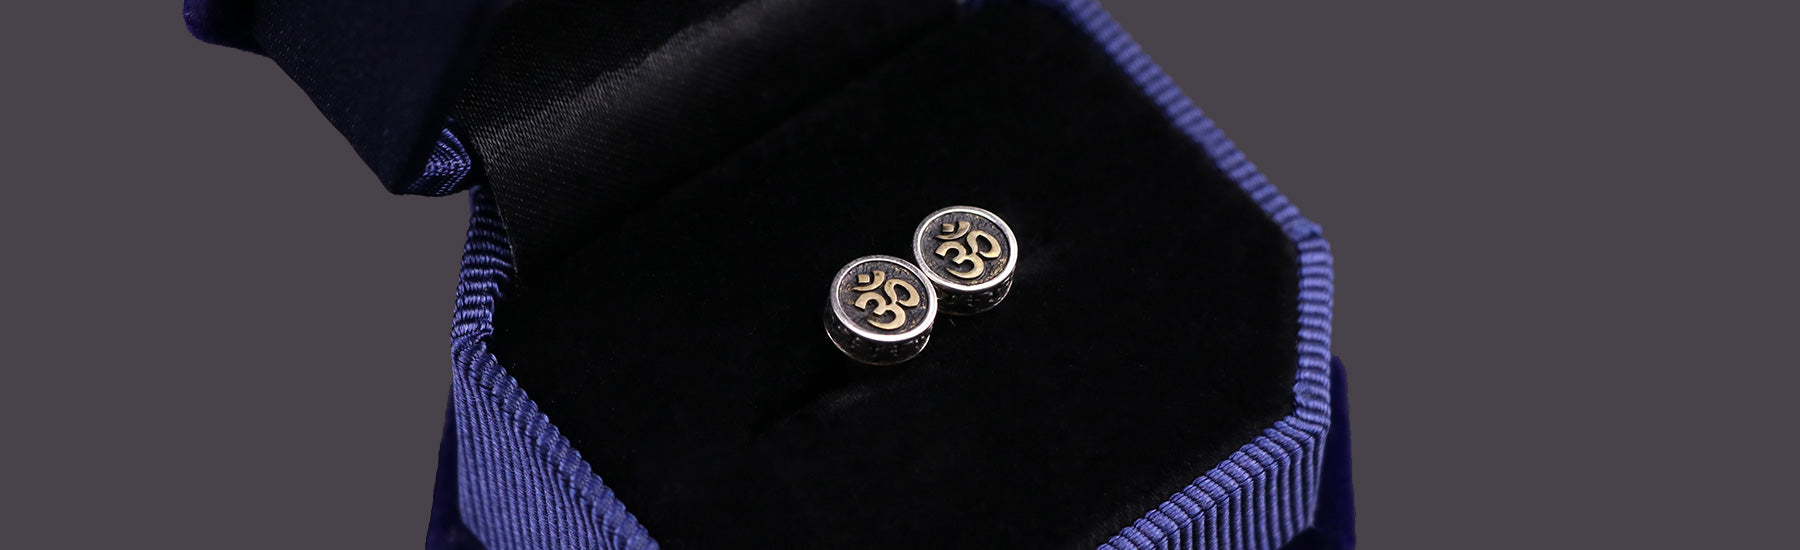 Tibetan Silver Buttons - Two Eye 25 pieces